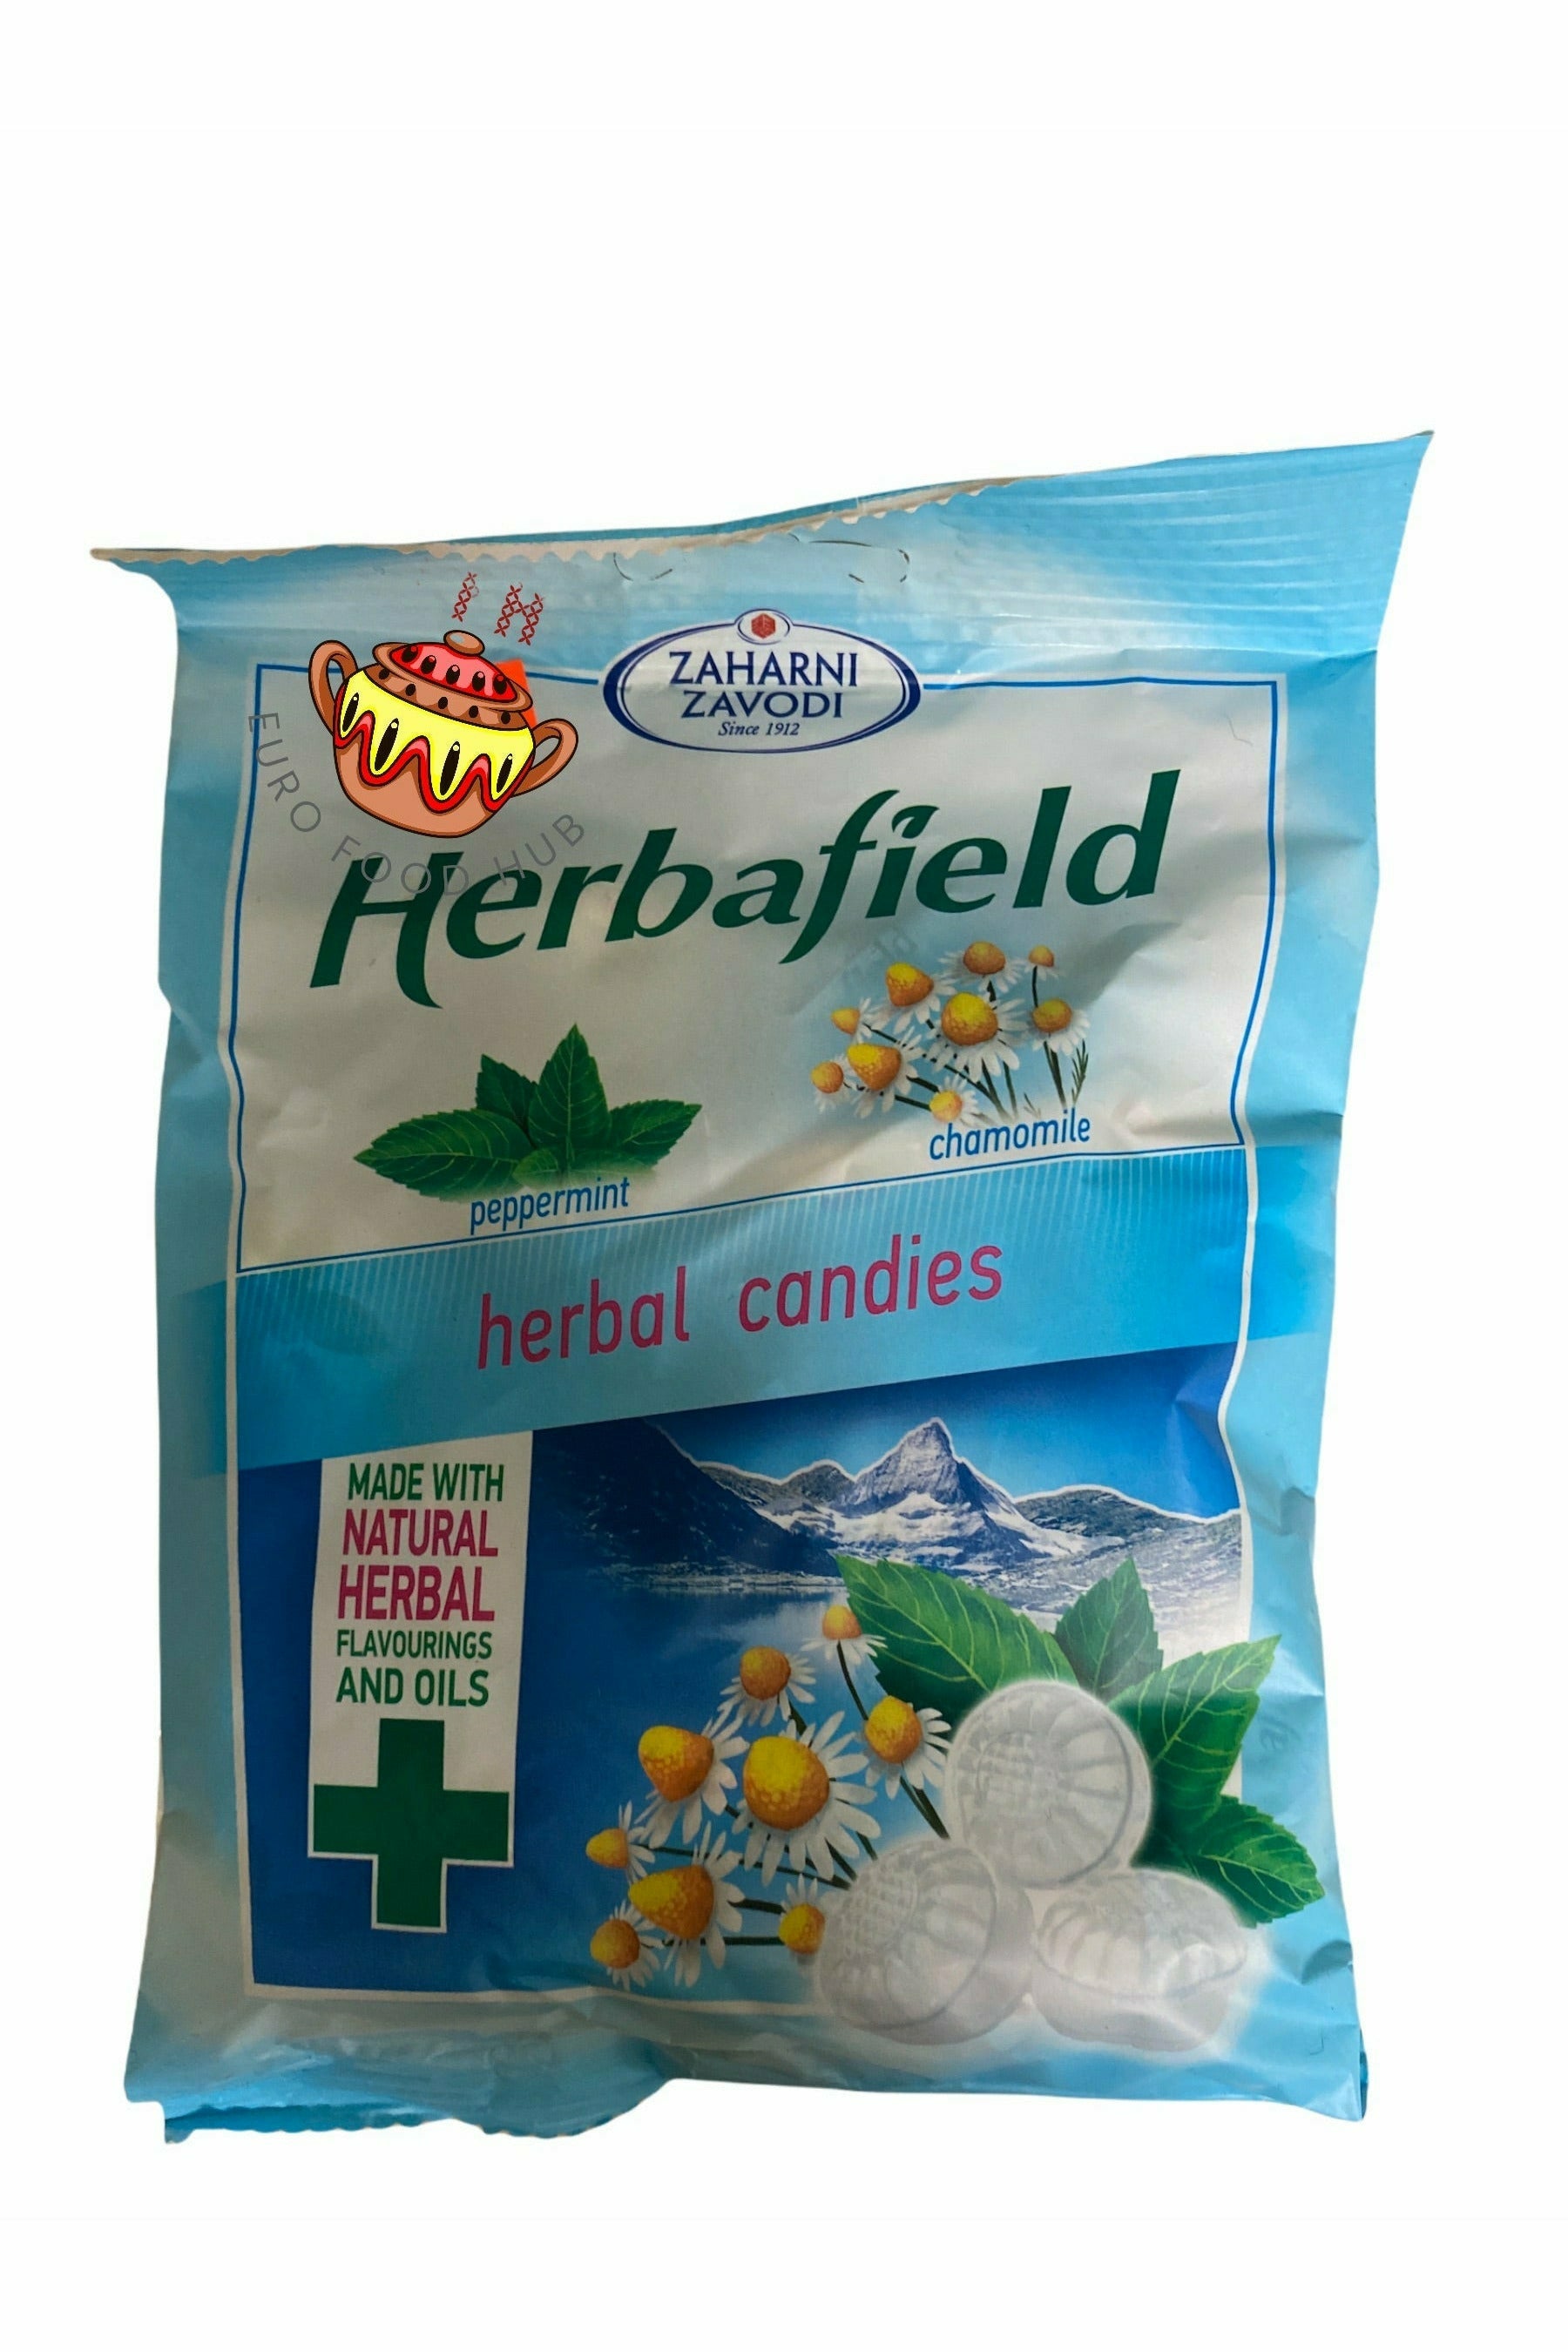 Herbafield - LUKCHETA - Hard Candy Mints - Classic